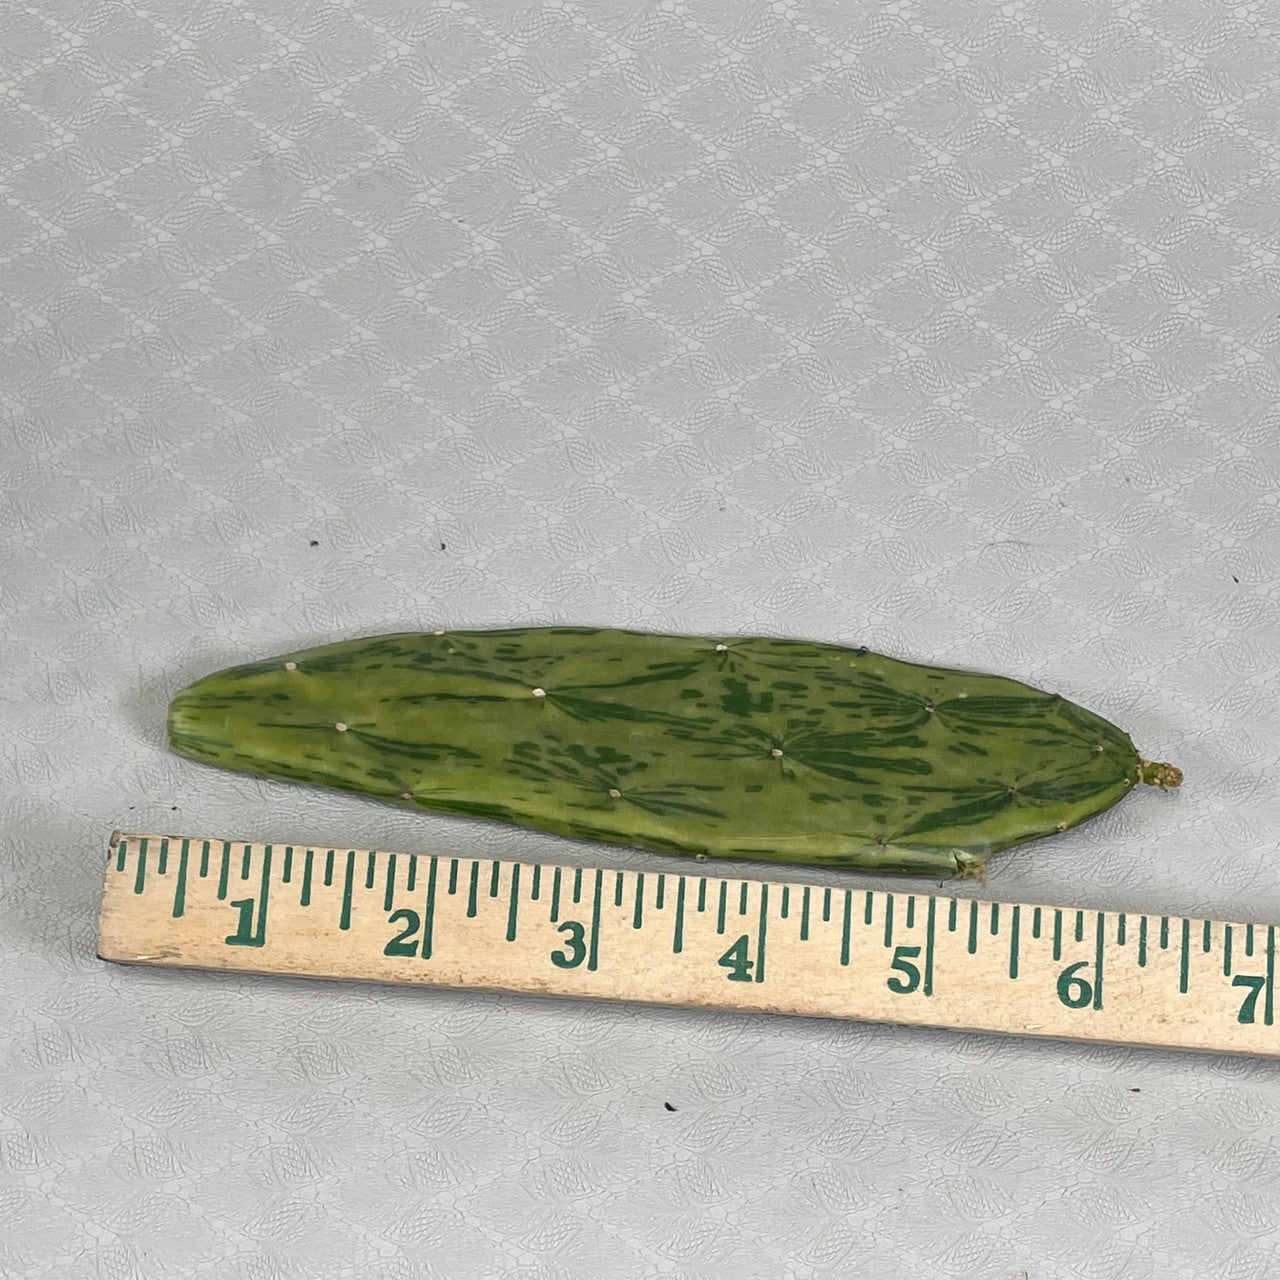 A single Opuntia Cochenillifera Varigata pad with a measuring stick